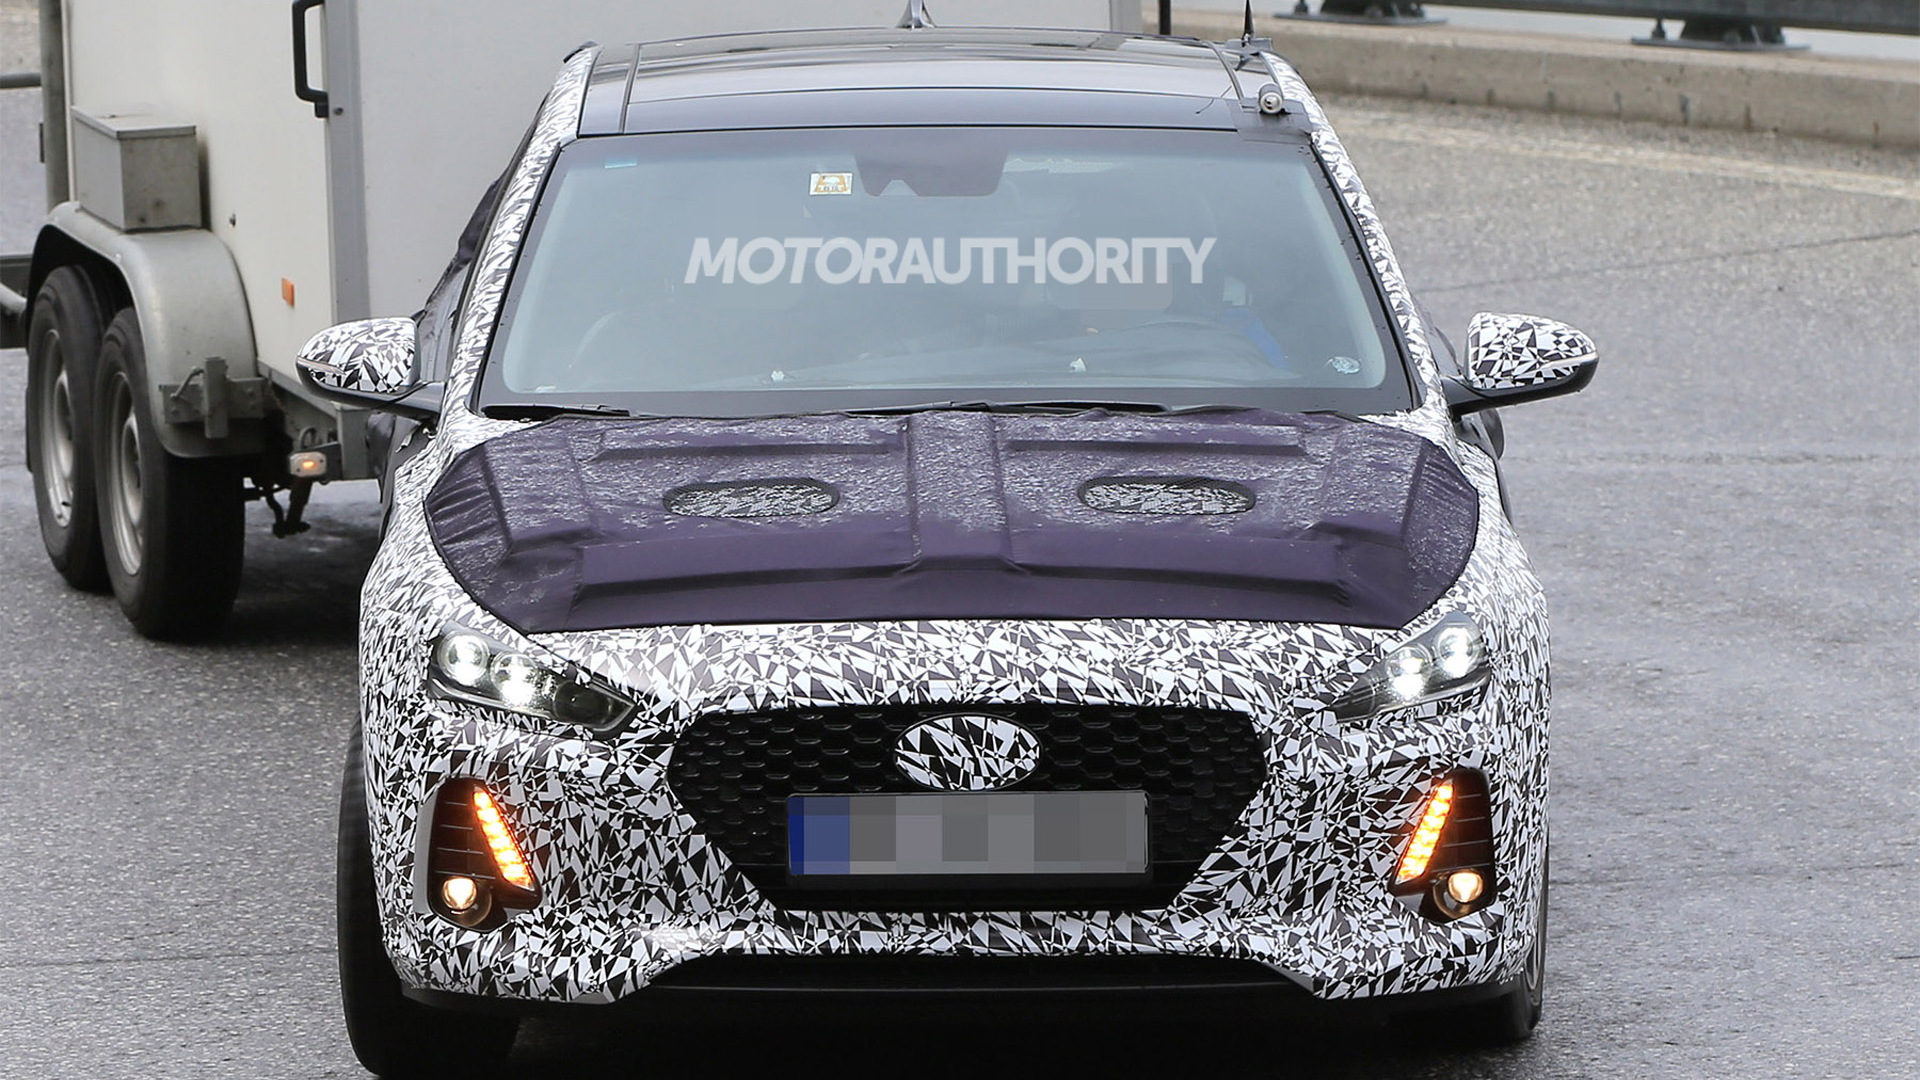 2018 Hyundai Elantra GT (i30) spy shots - Image via S. Baldauf/SB-Medien